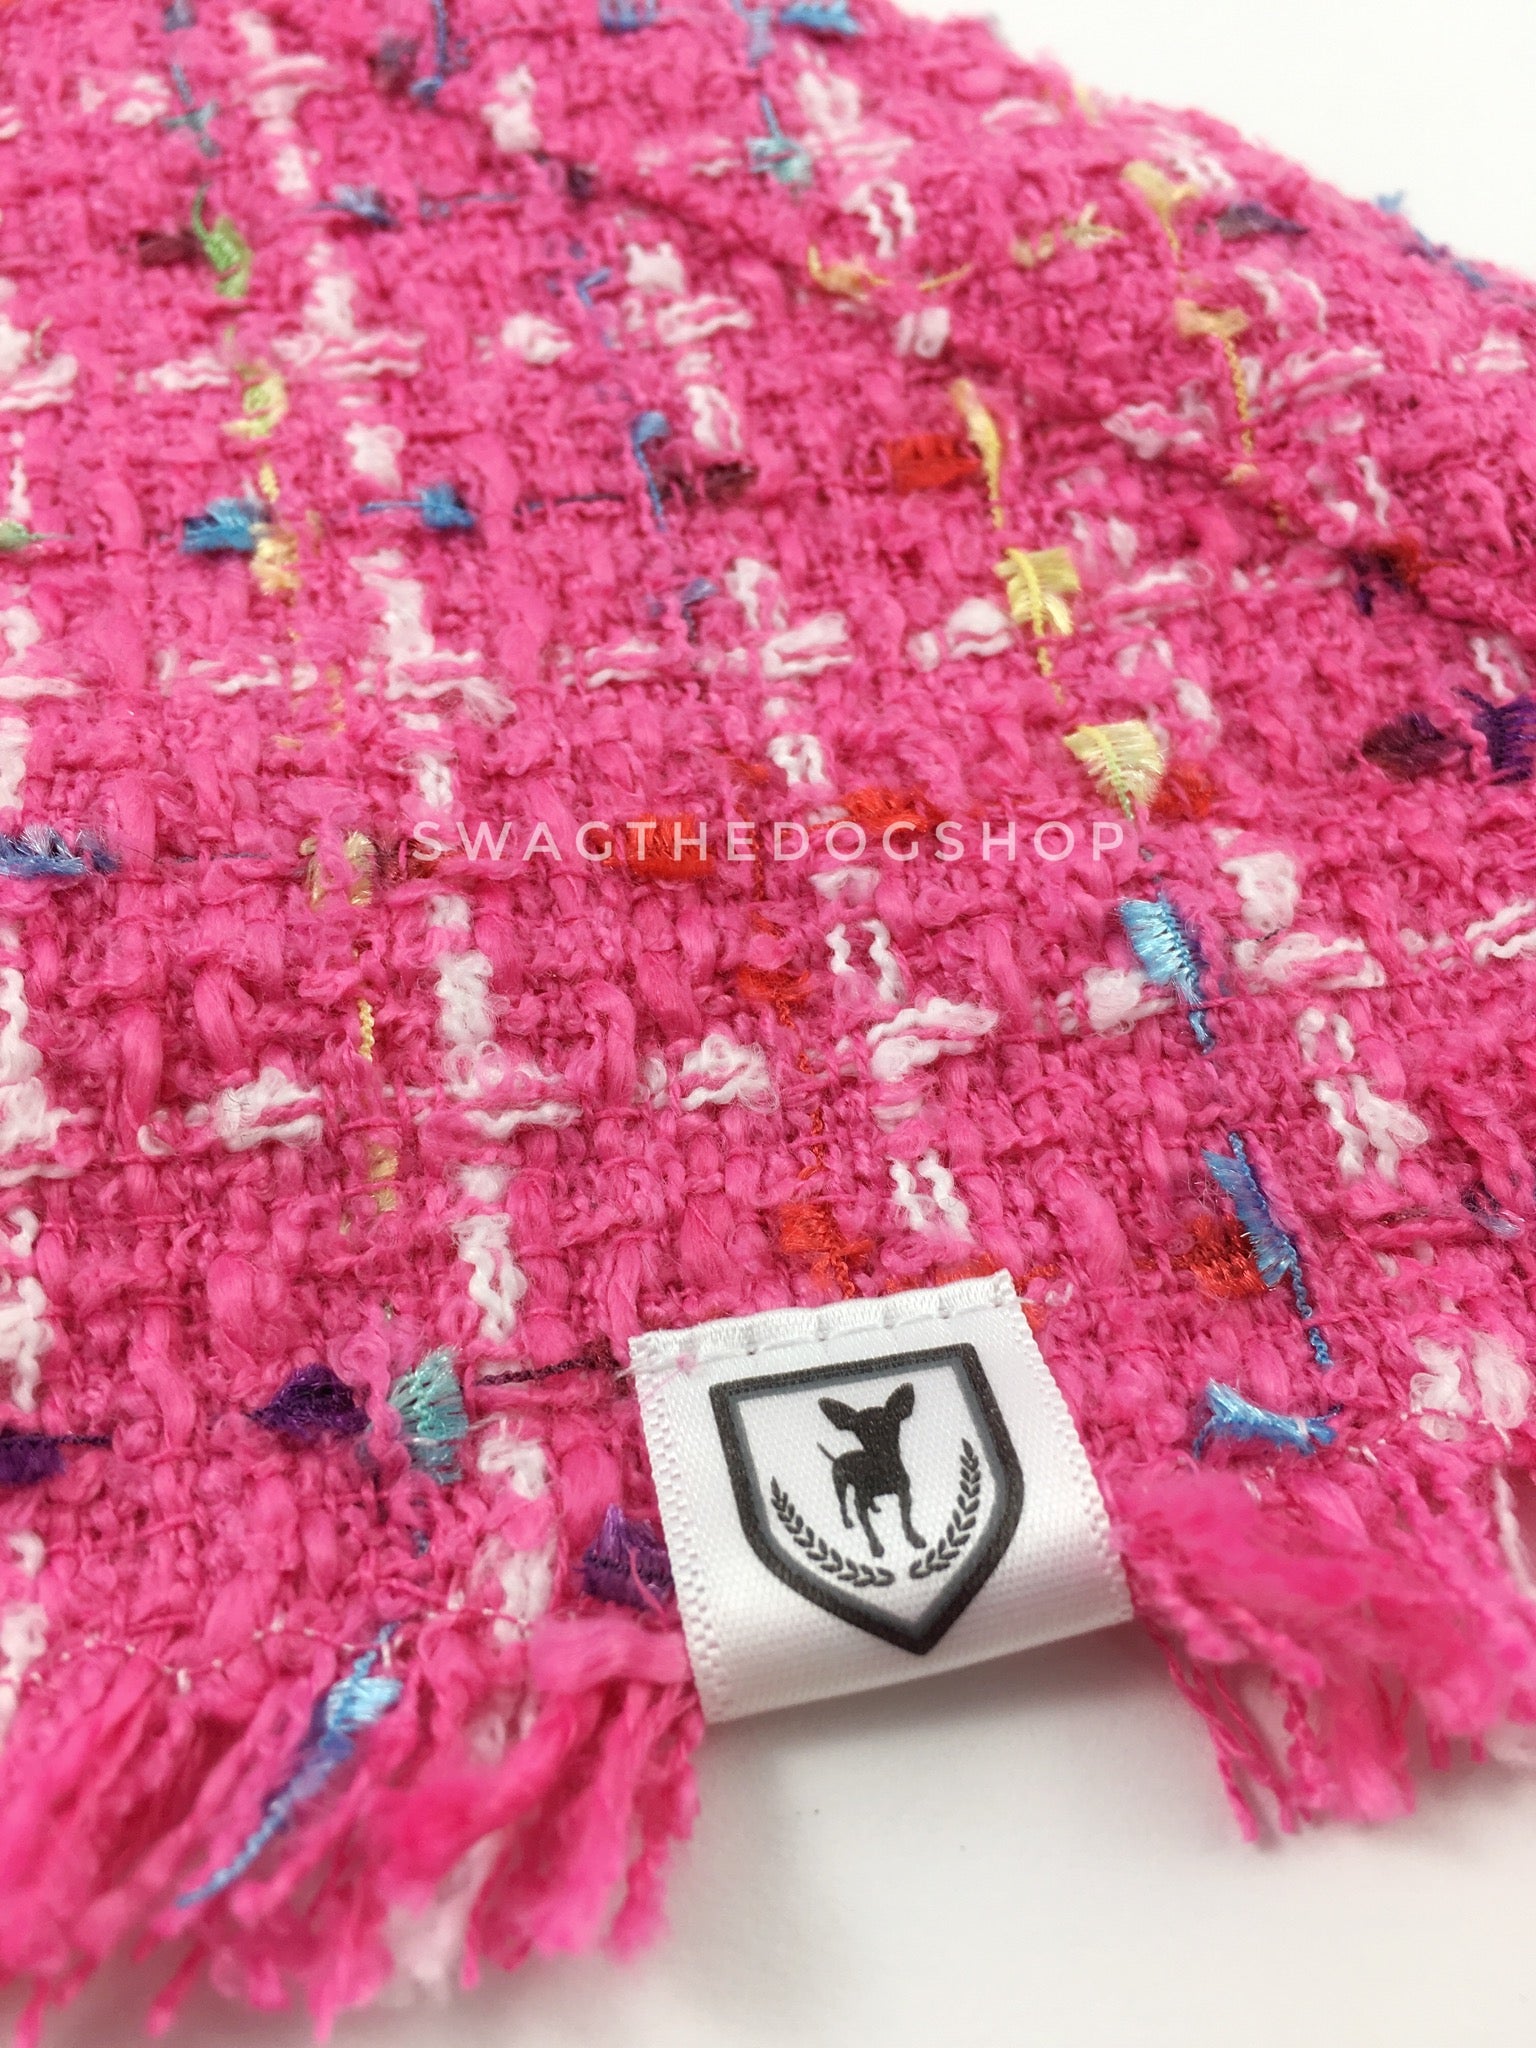 Hot Pink Tweed Swagdana with Frayed Edges - Close-up View of Product. Dog Bandana. Dog Scarf.